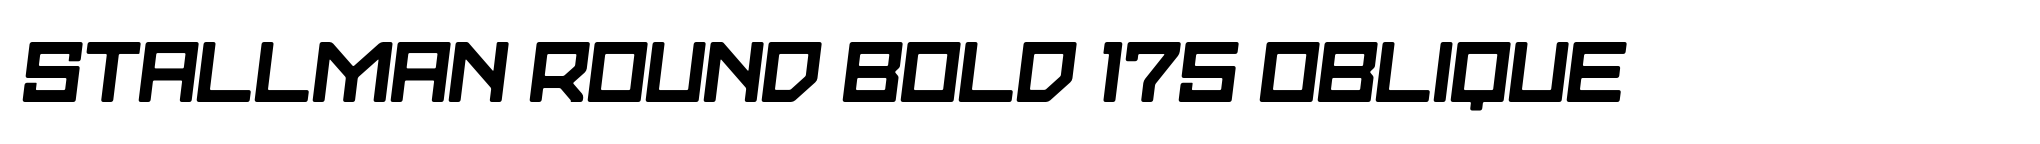 Stallman Round Bold 175 Oblique image